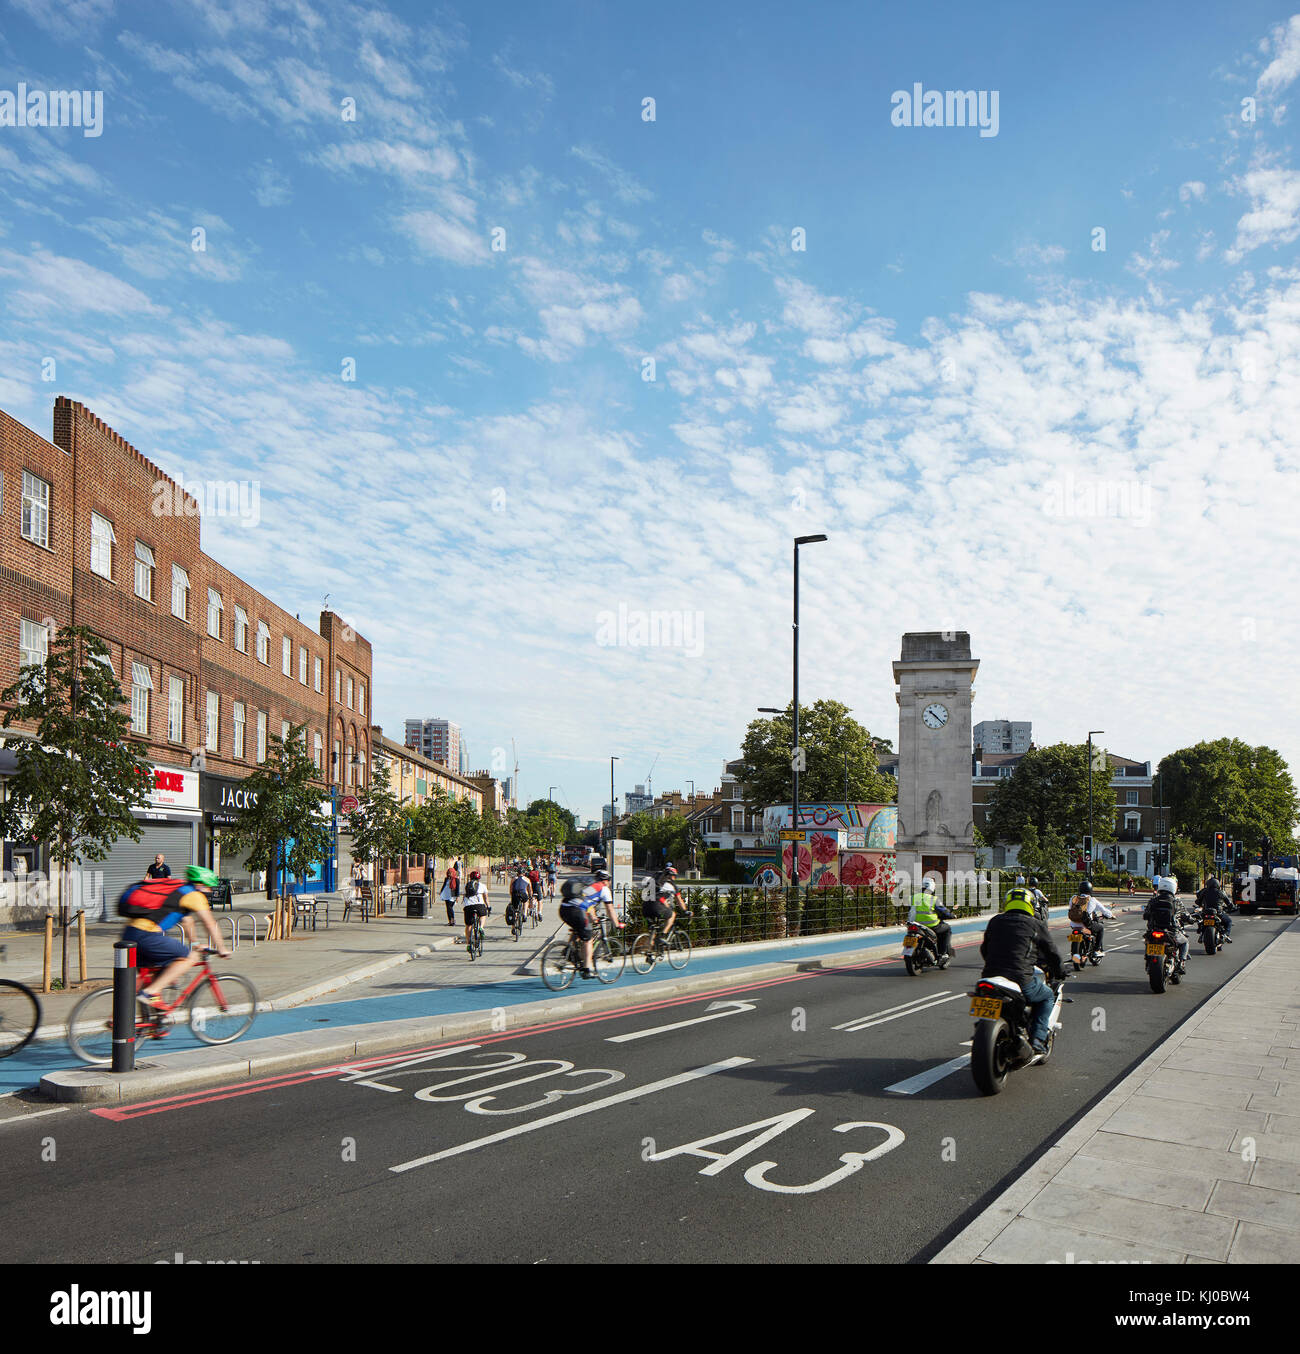 Intersection avec la nouvelle piste cyclable et matin le trafic. Stockwell Framework Masterplan, Londres, Royaume-Uni. Architecte : DSDHA, 2017. Banque D'Images